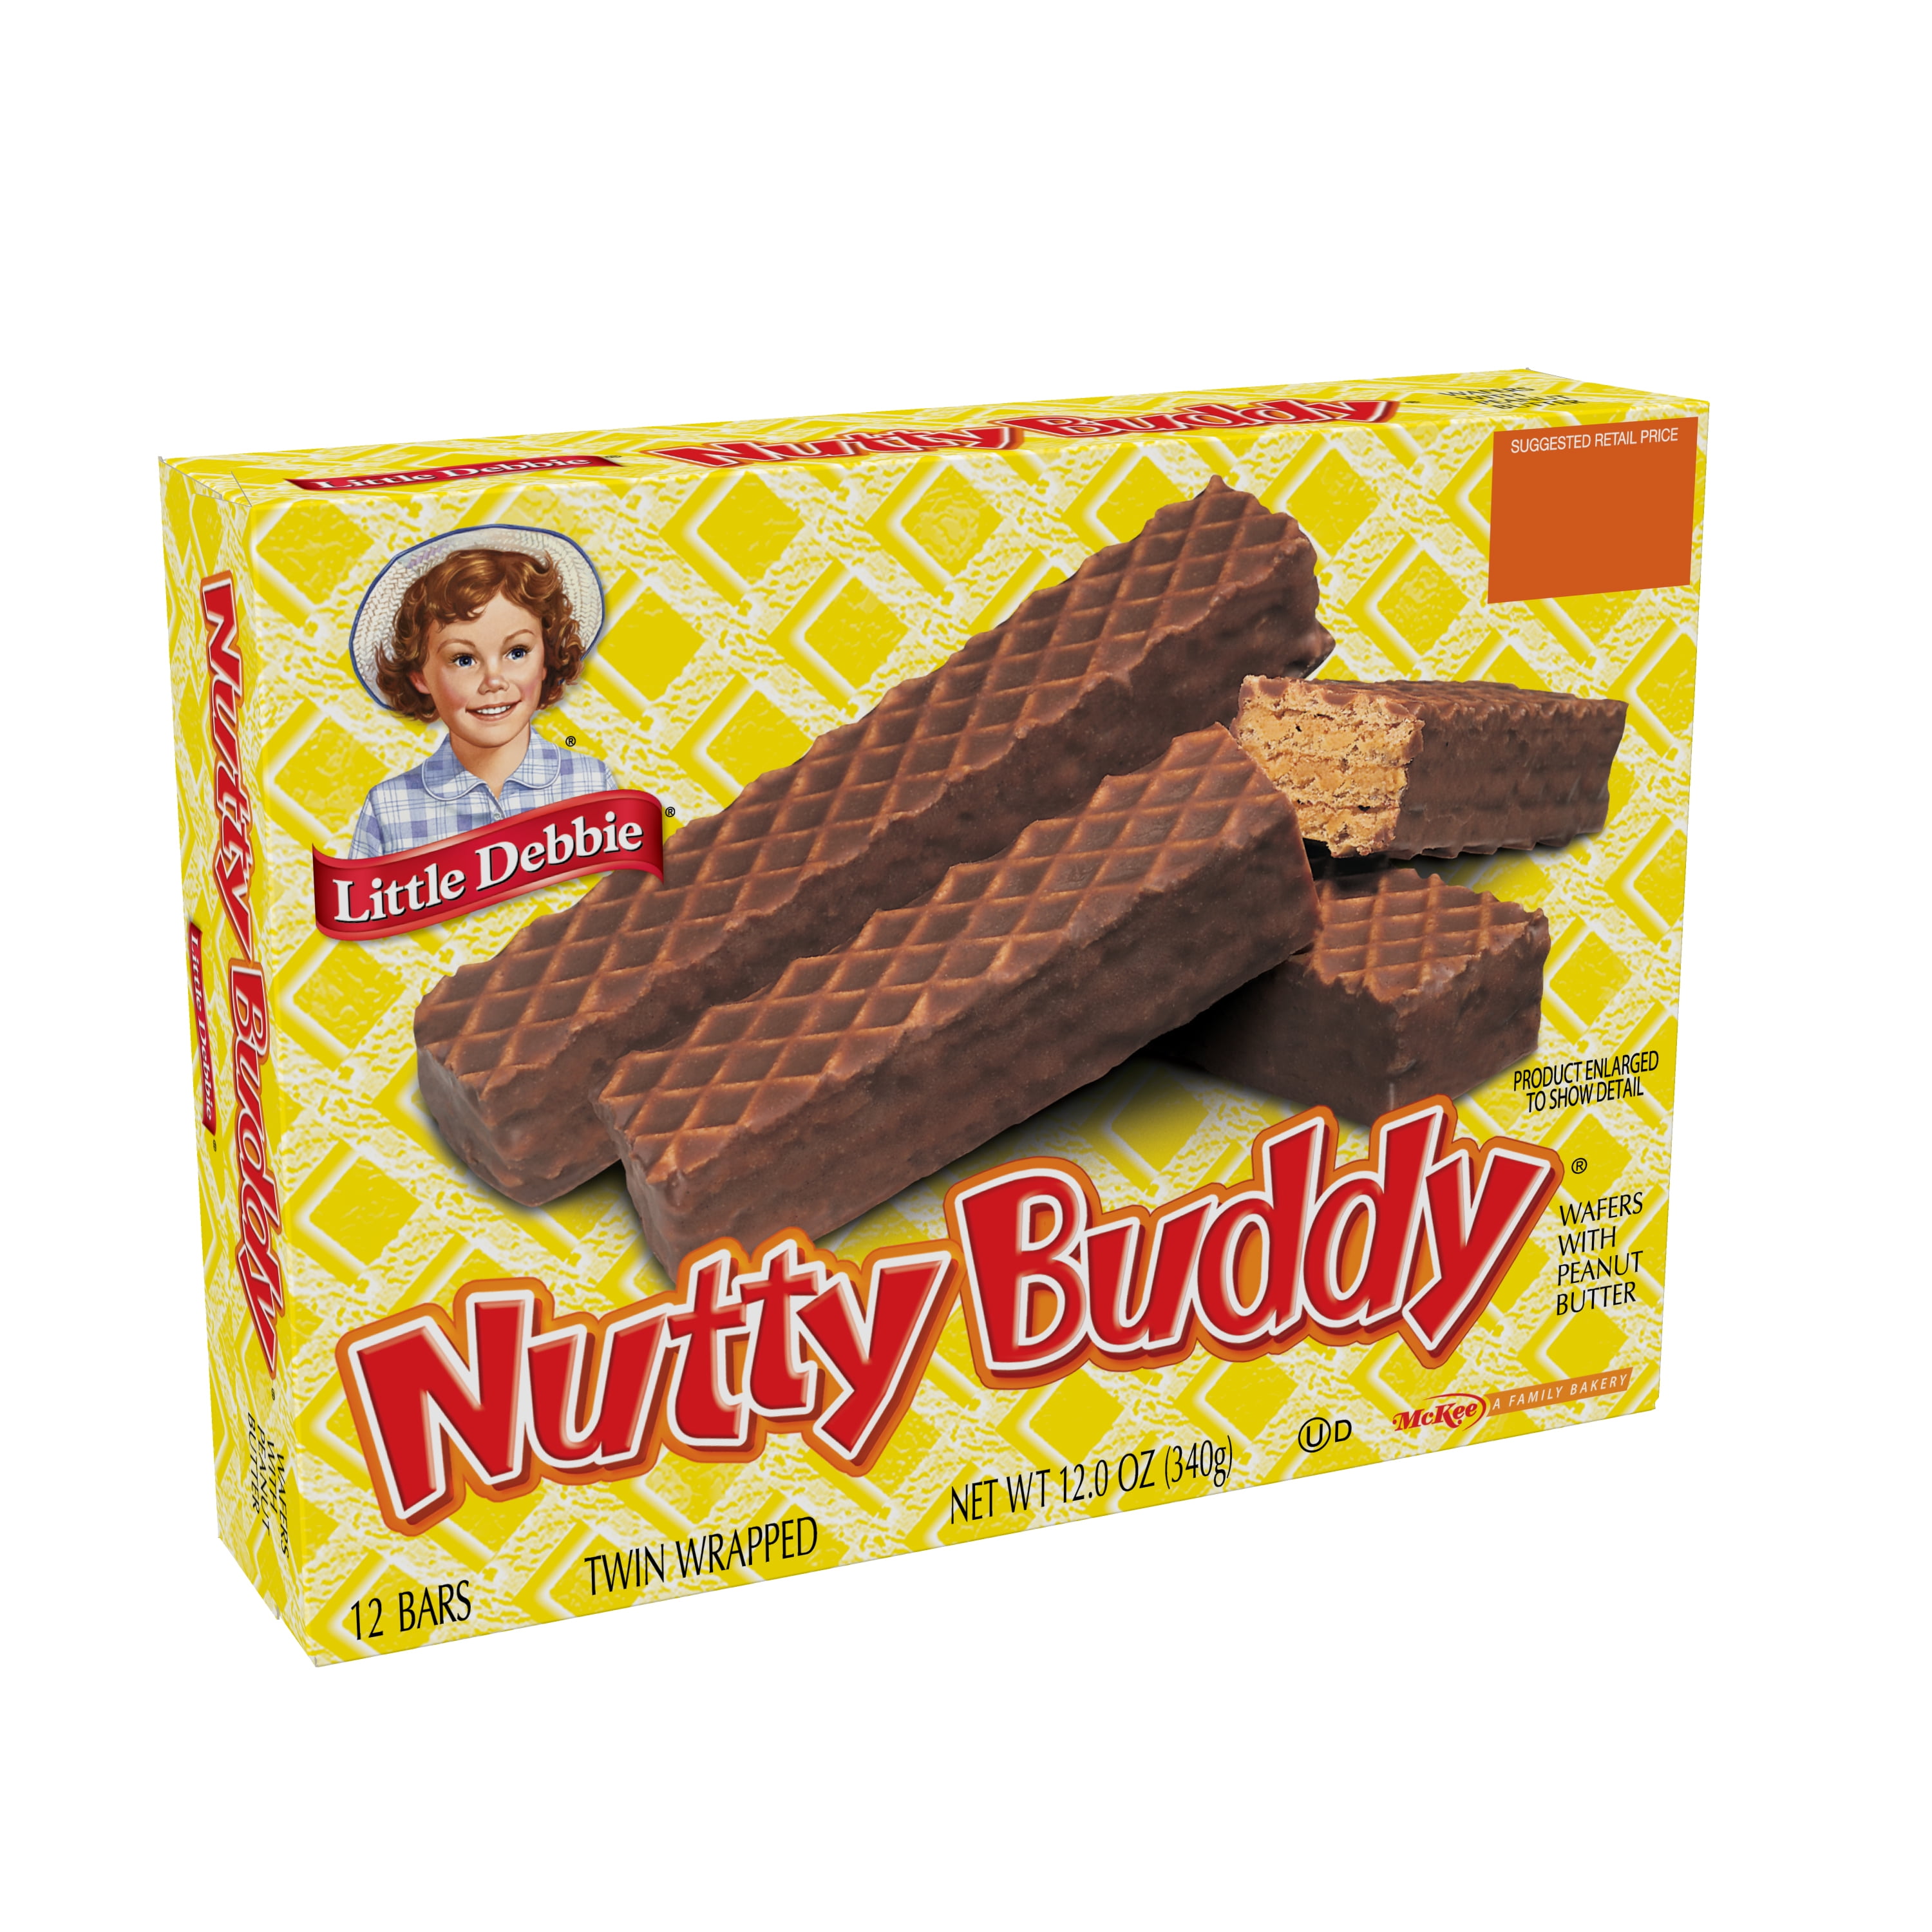 Little Debbie NUTTY BUDDY  wafers bar